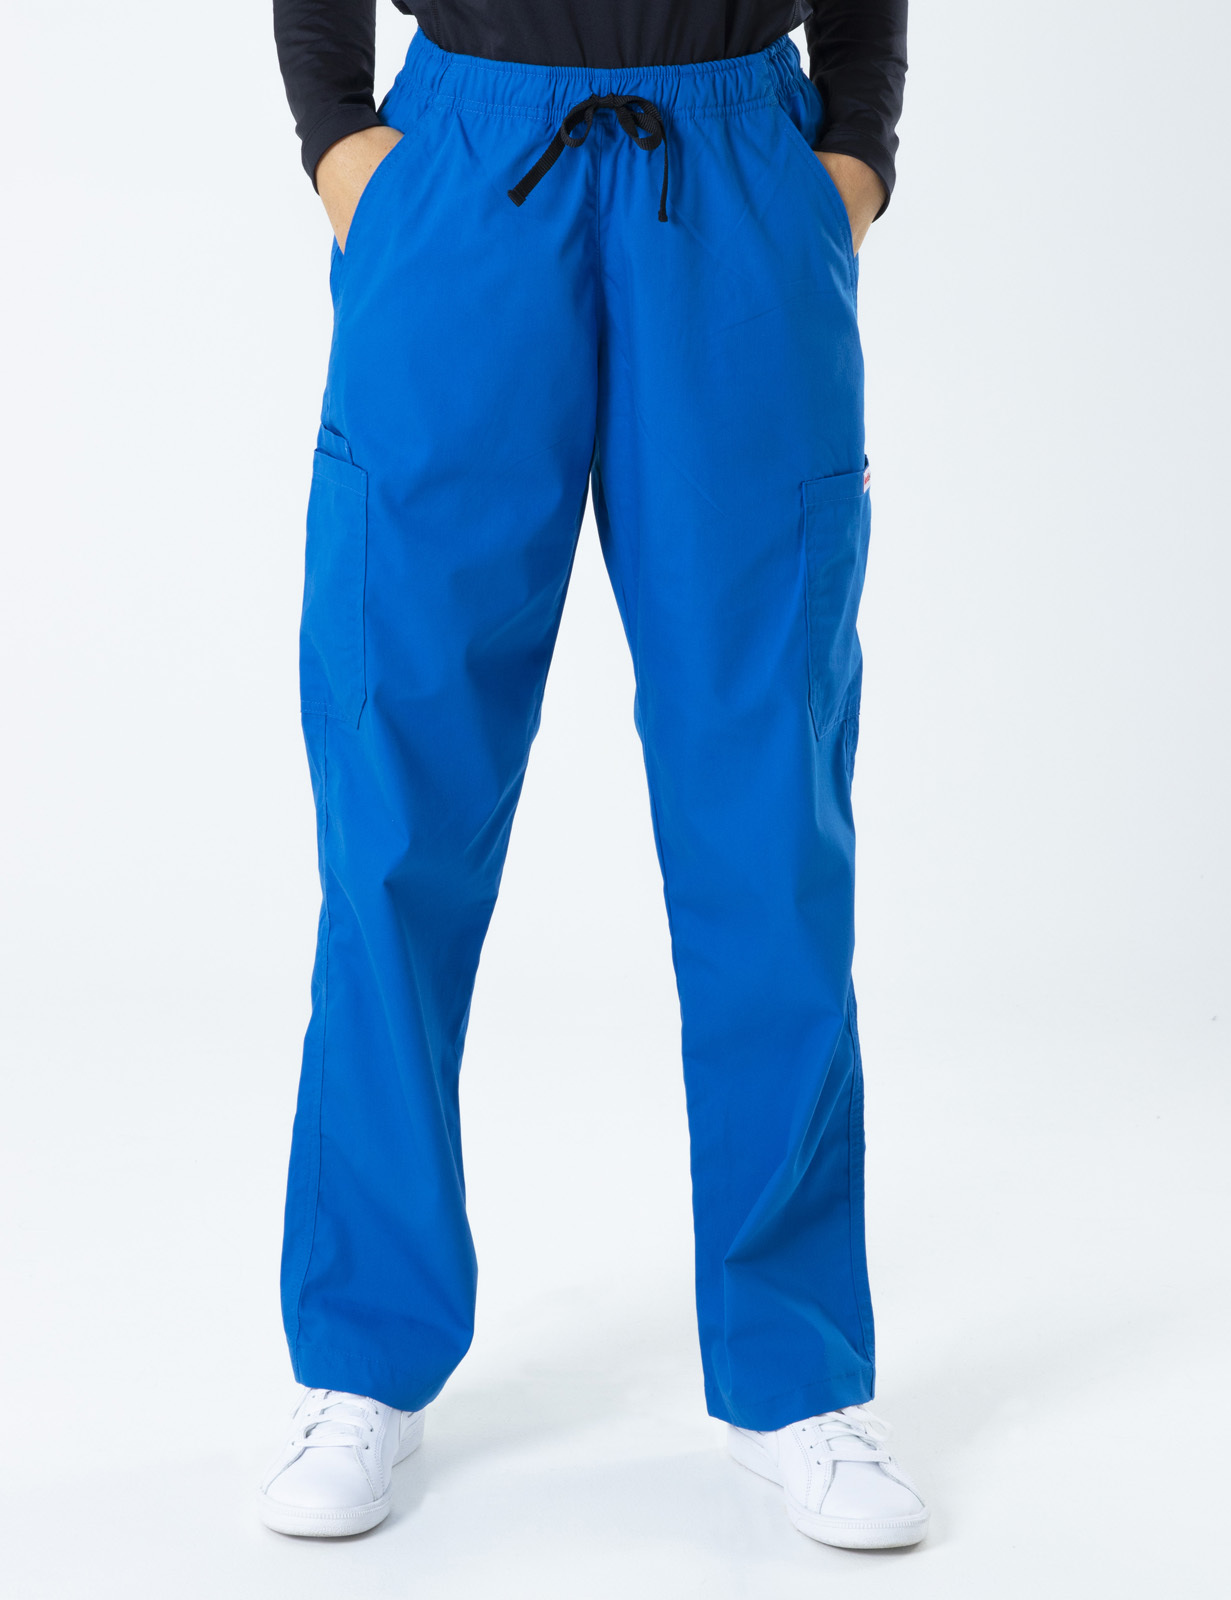 Women's Navy Scrubs - Comfy & Stylish Women's Navy Blue Scrubs